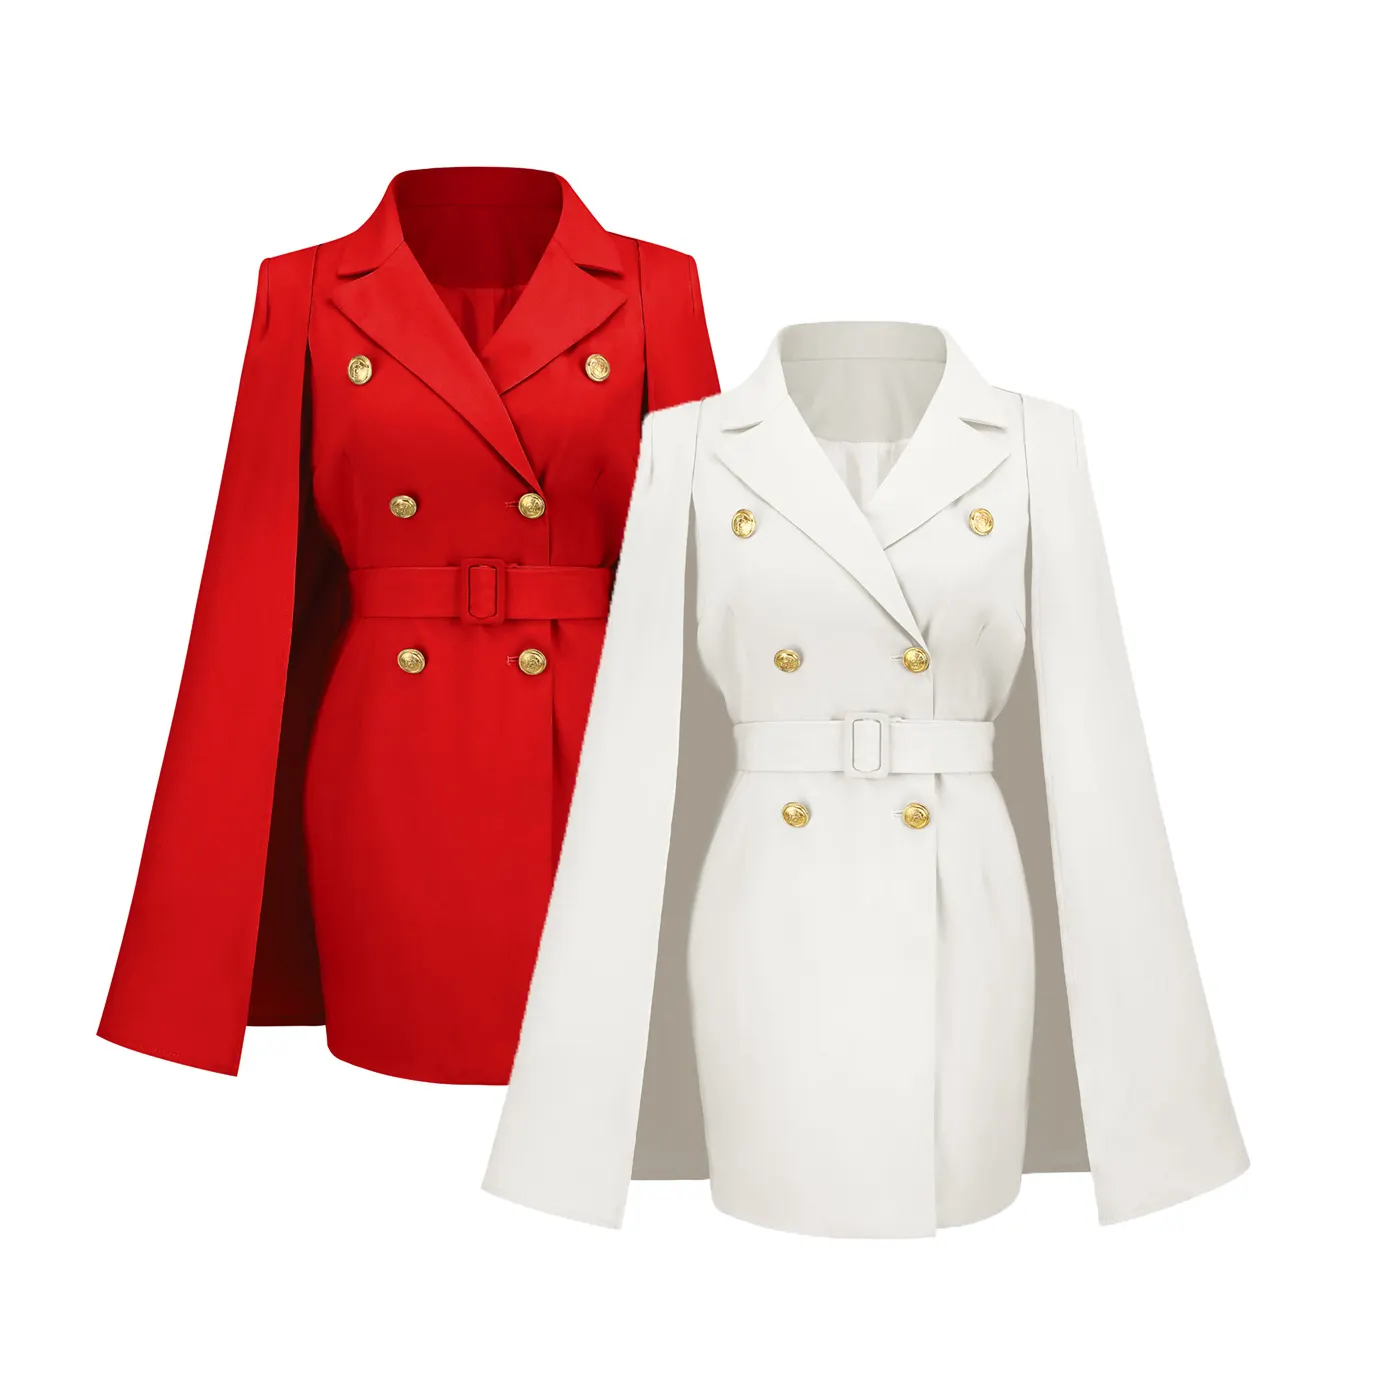 OEM customized solid color red blue black white blazer dress cloak women's blazers ladies women dresses